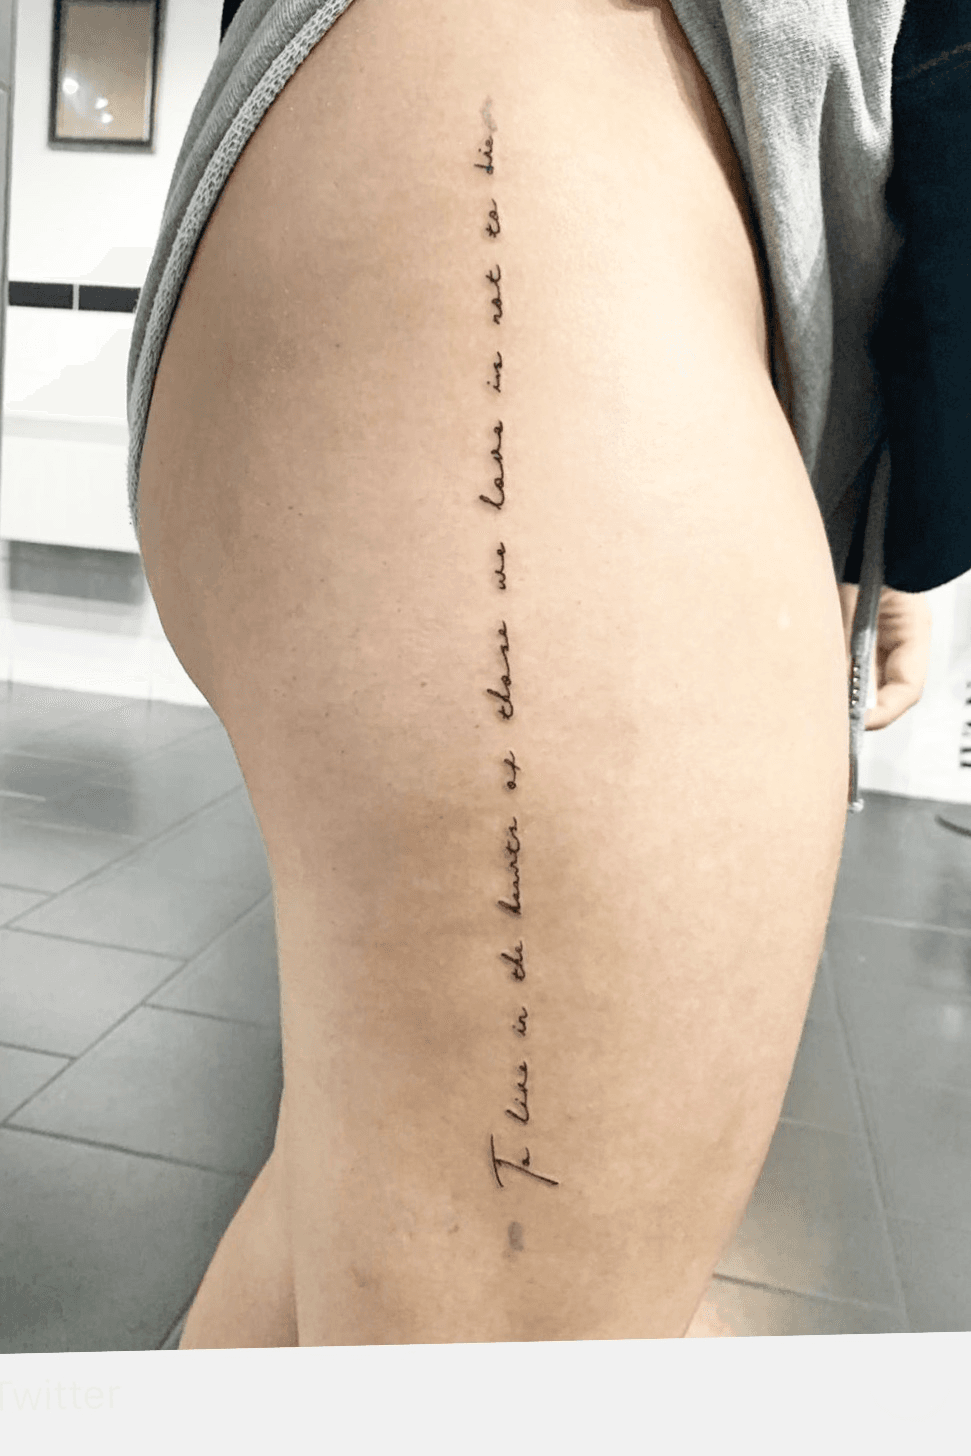 23 Latest Leg Quote Tattoos